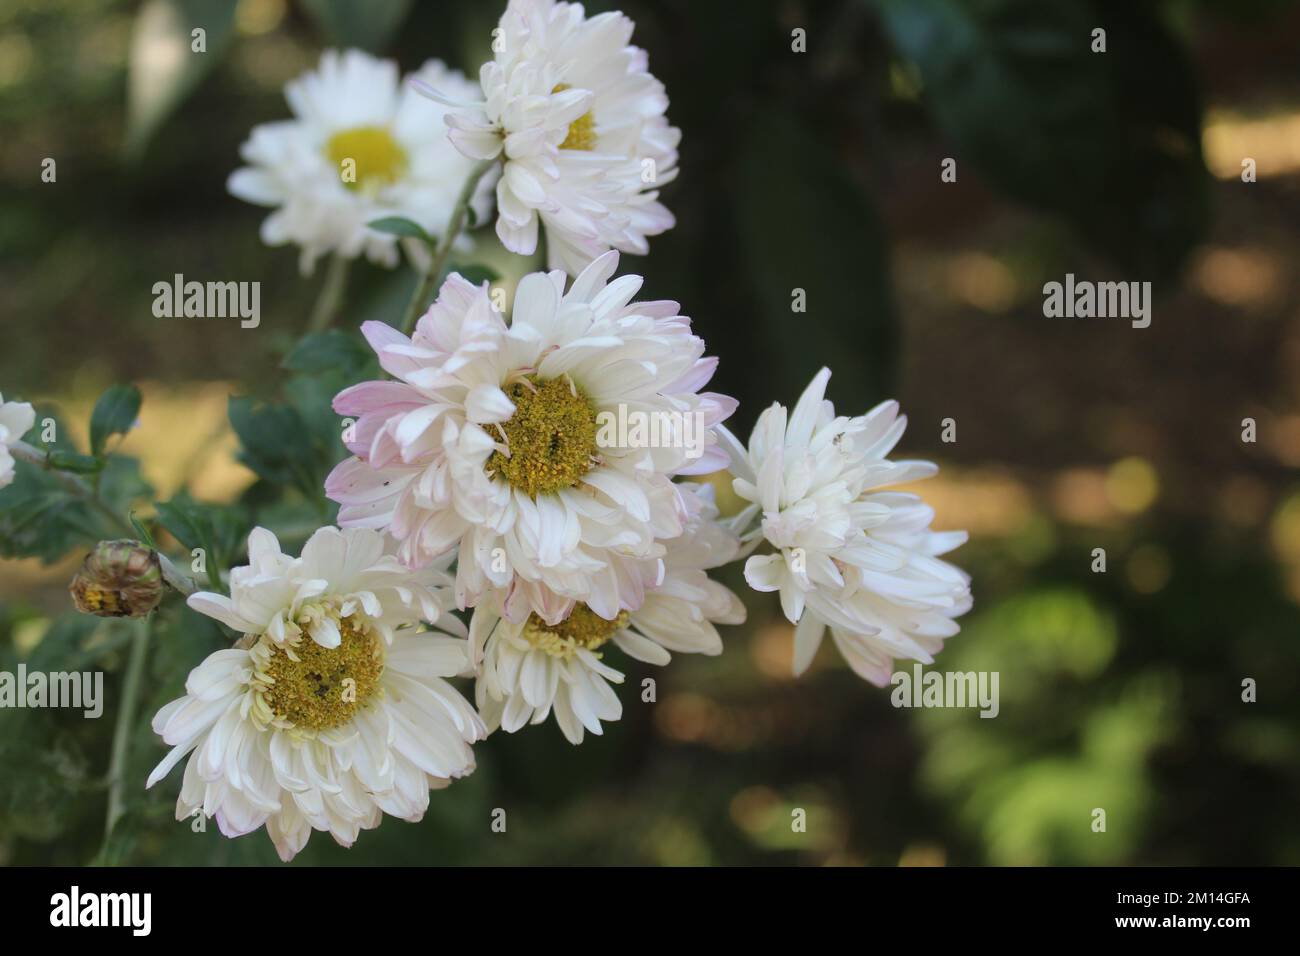 Hardy garden mum (chrysanthemum morifolium) white flower in garden under sunset. Stock Photo